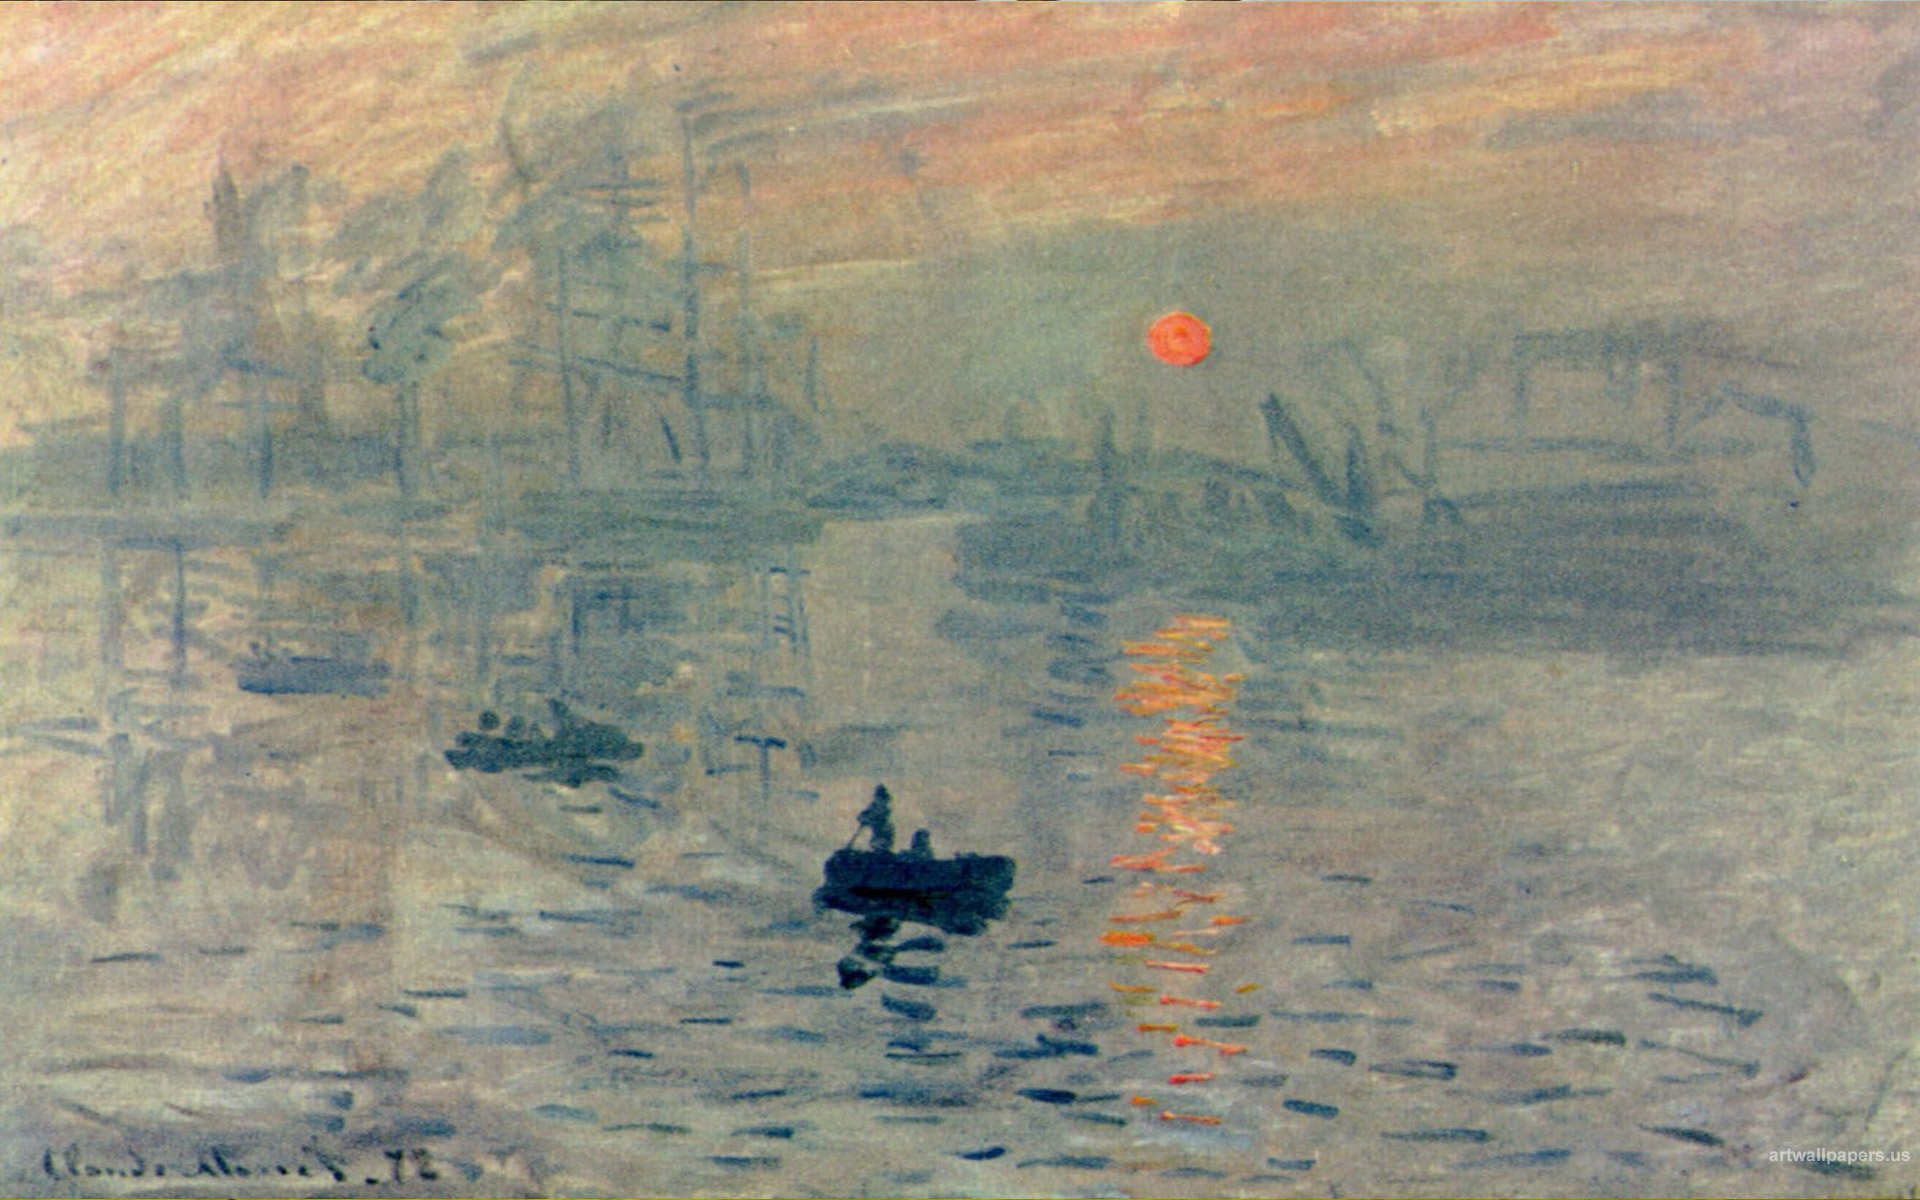 Claude Monet Wallpaper Paintings Wallpaper Art Wallpapers